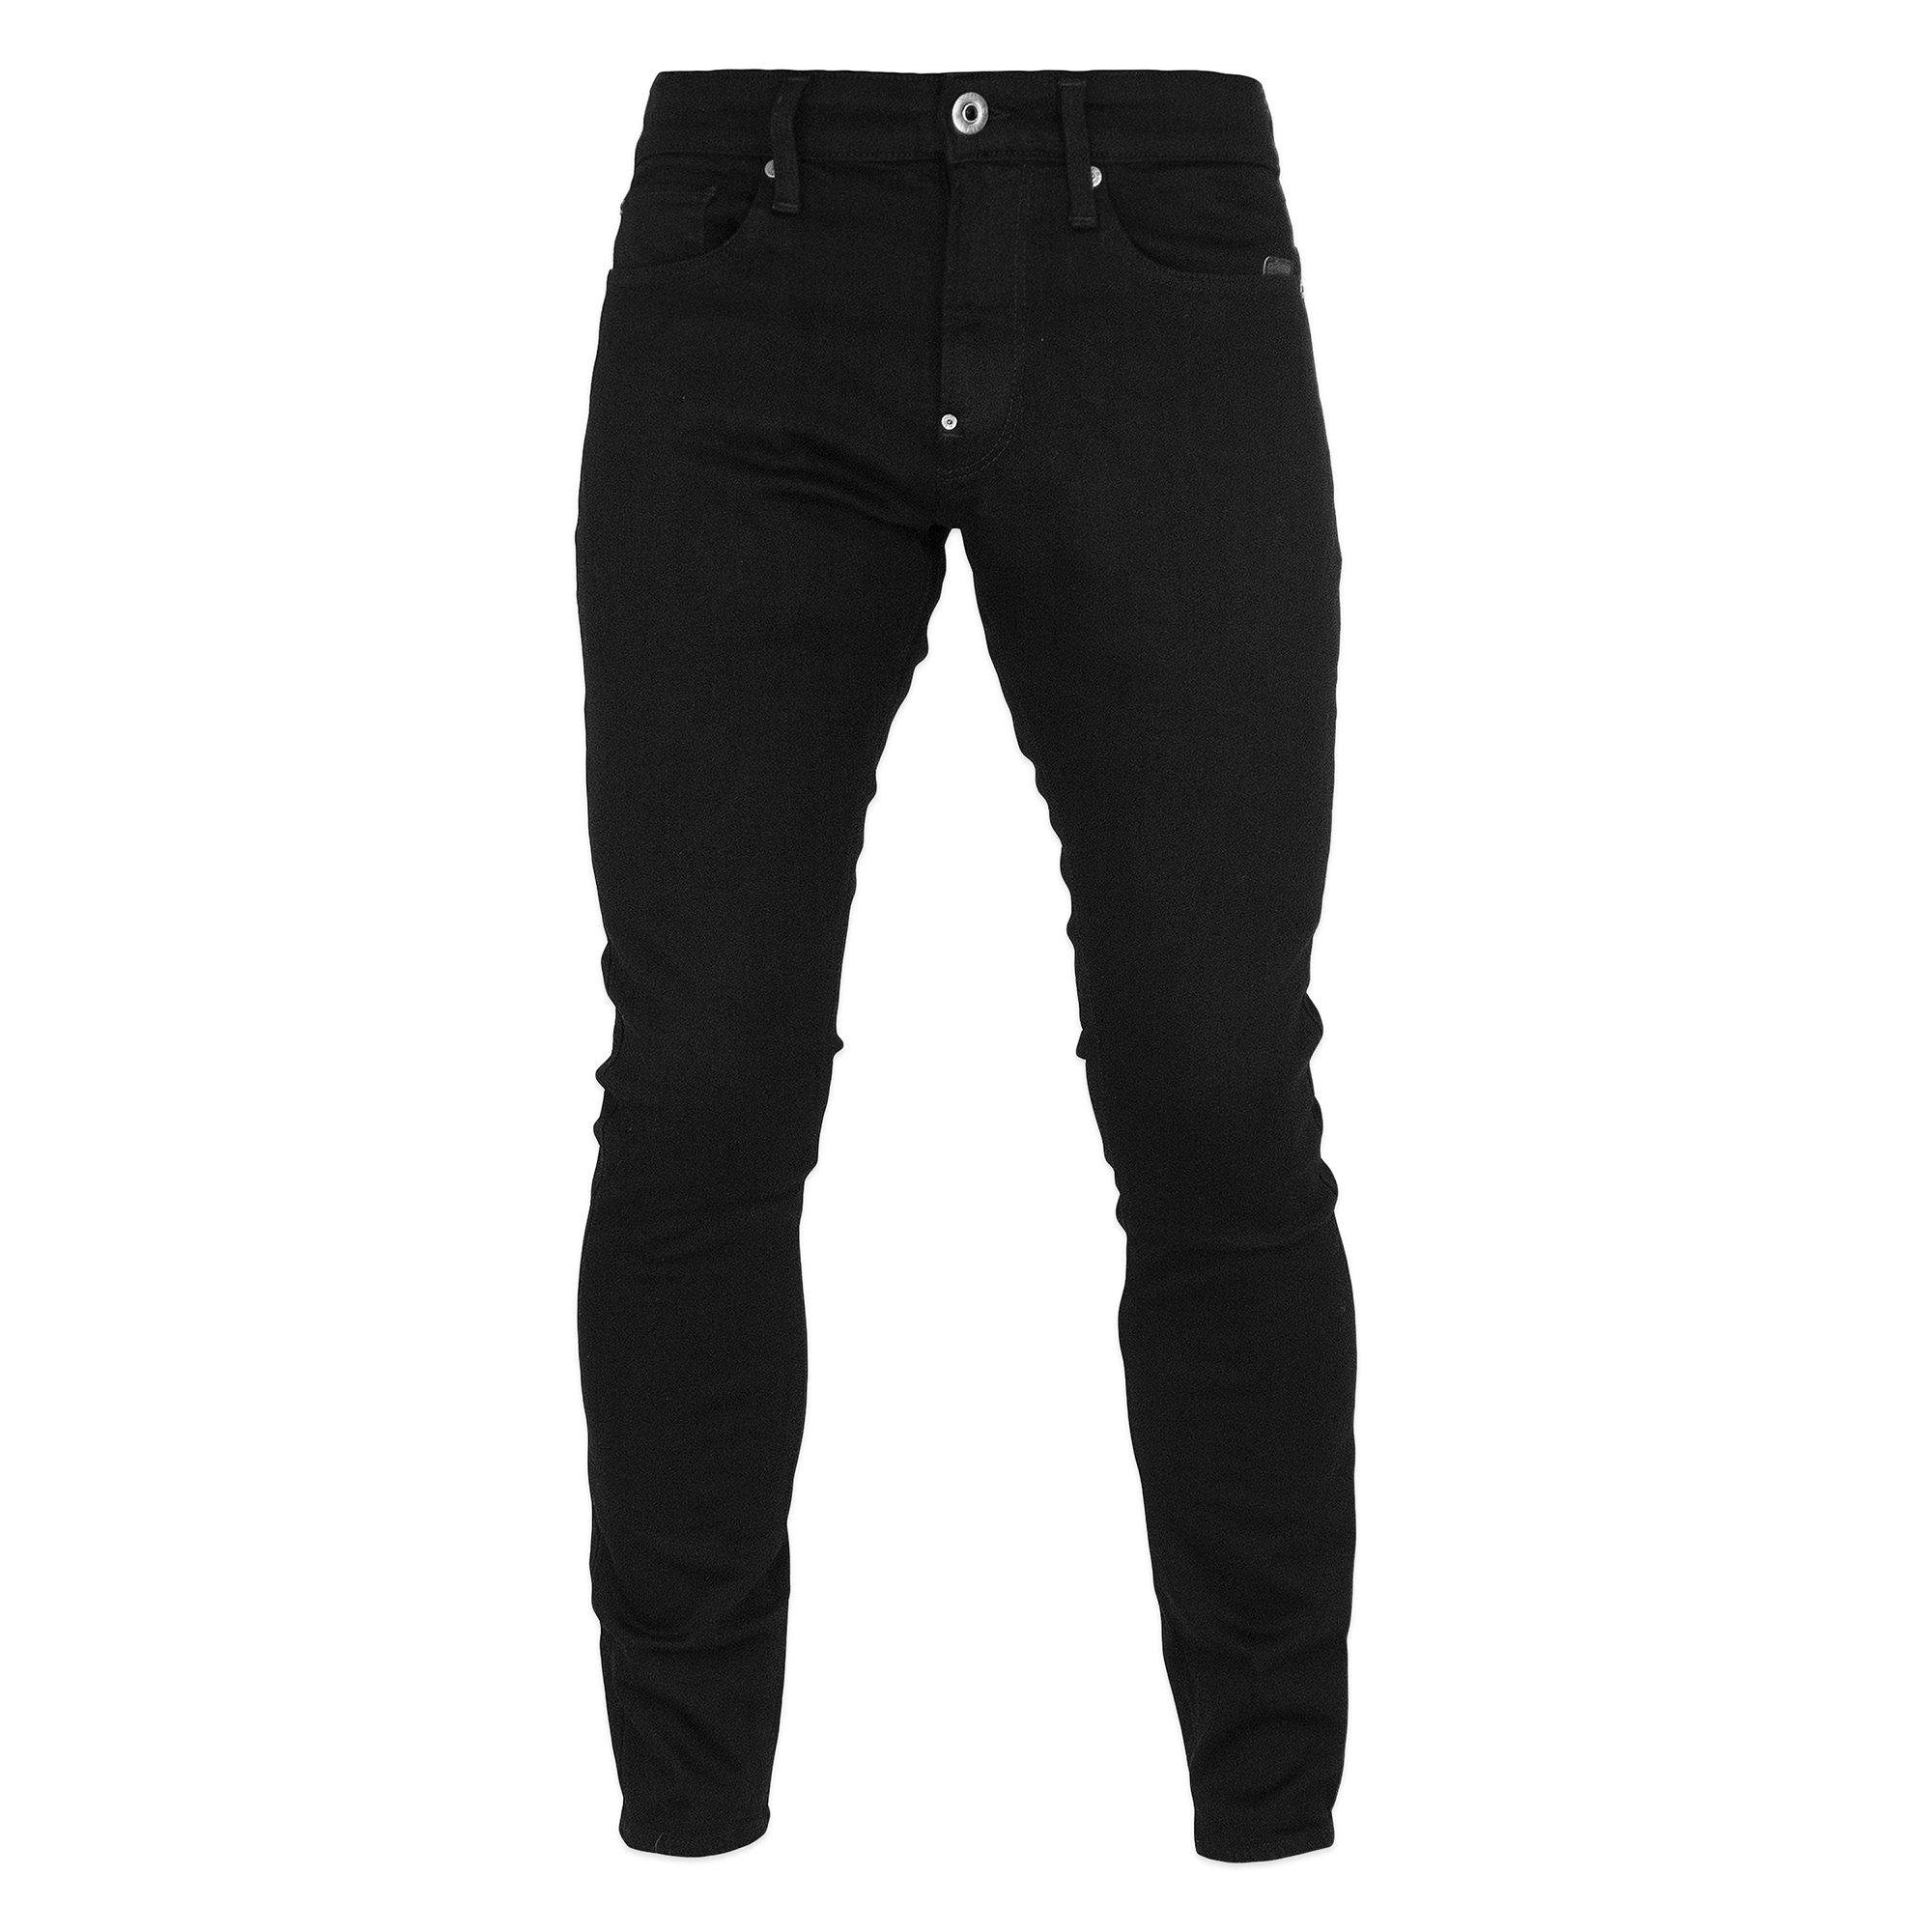 G-Star RAW Denim G-star Revend Skinny Jeans in Black for Men - Save 1% |  Lyst